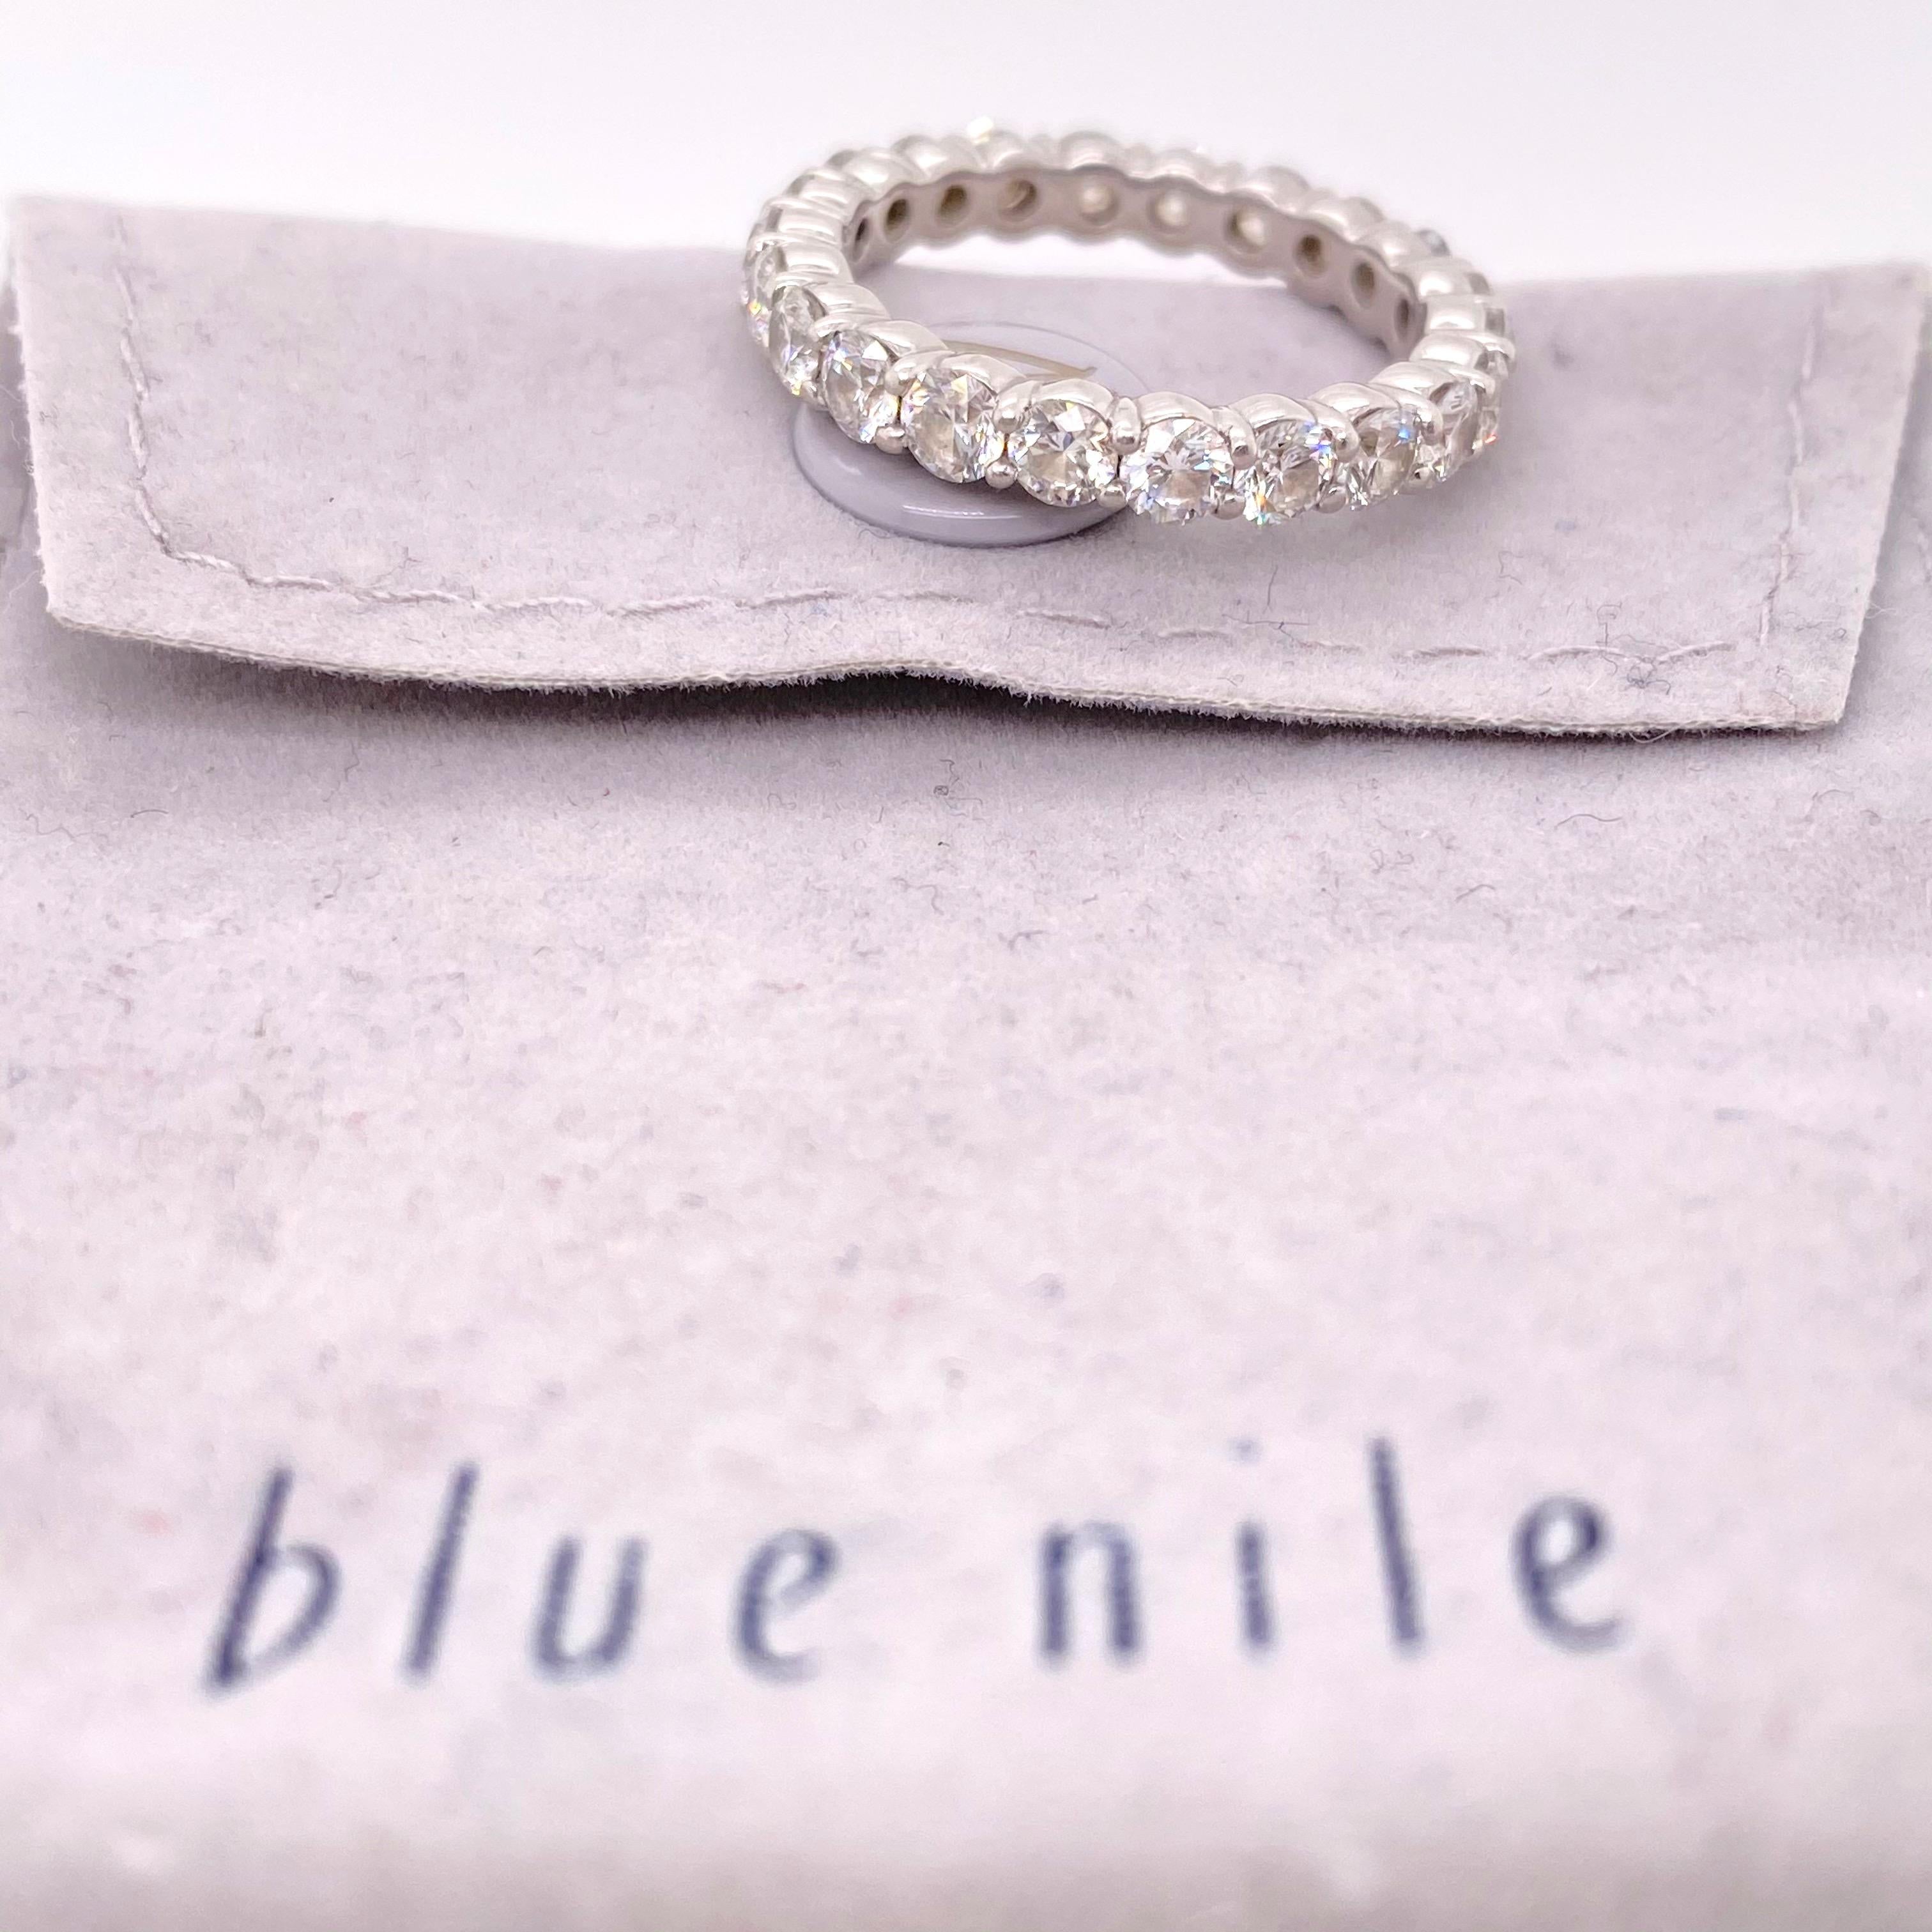 Blue Nile Diamond Eternity Band
Style:  Full Circle
Ref. number:  #1264788
Metal:  Platinum
Size:  5.5 
Measurements:  2.8 MM
TCW:  2.07 tcw
Main Diamond:  22 Round Brilliant Diamonds
Color & Clarity:  H - VS2 
Hallmark:  SDIL PT950
Includes:  BLUE